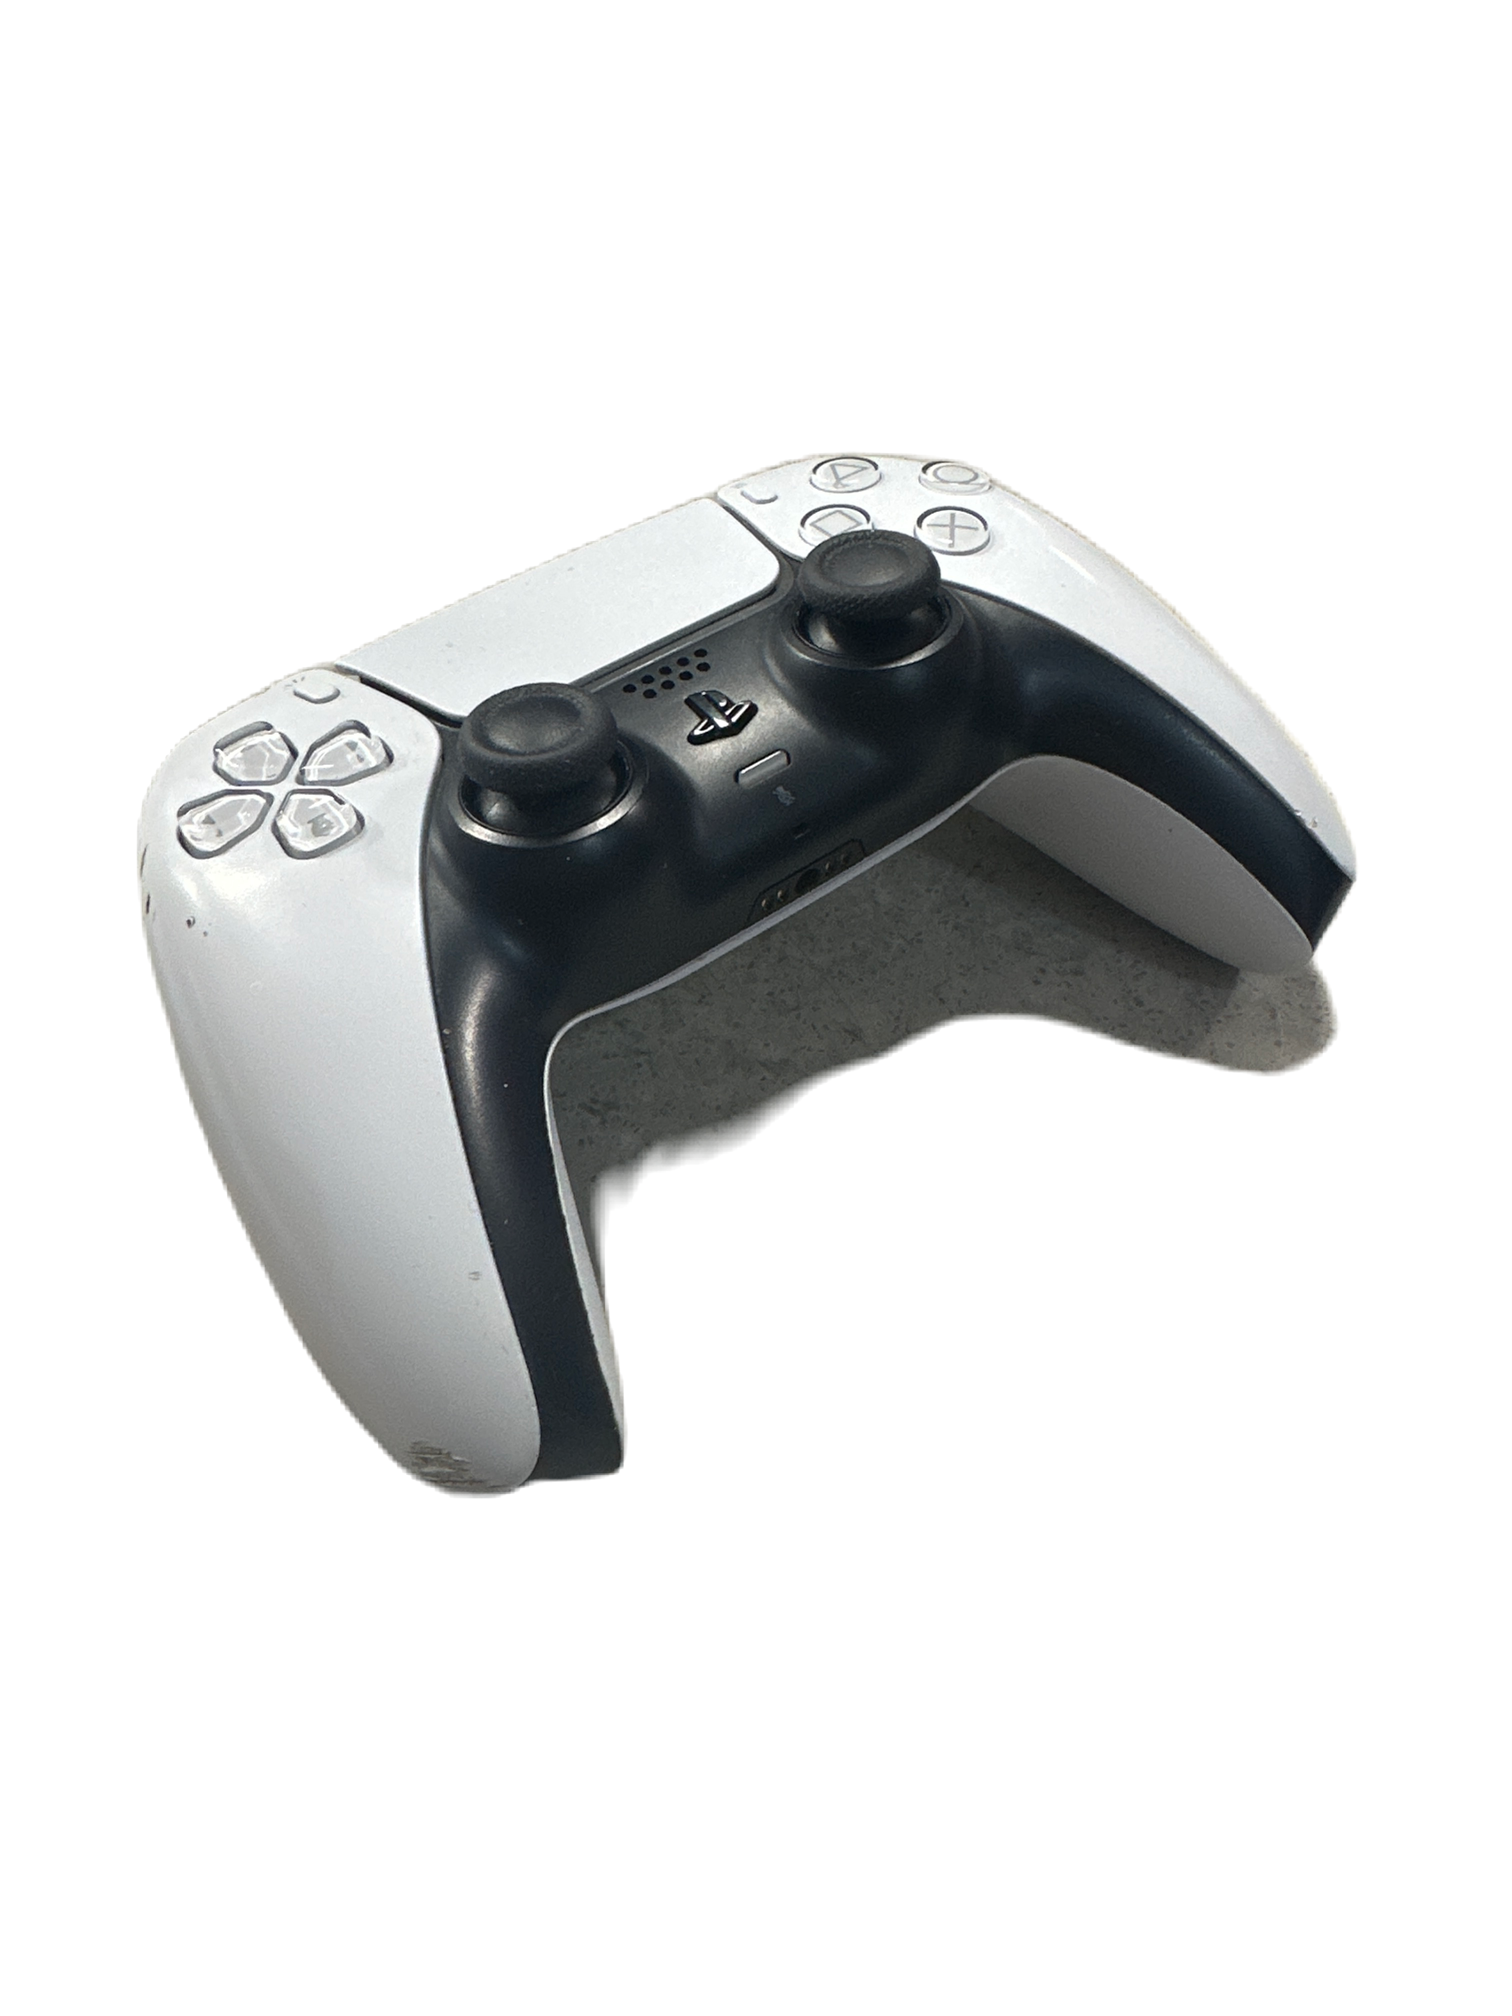 PS5 Dualsense controller - White - Unboxed